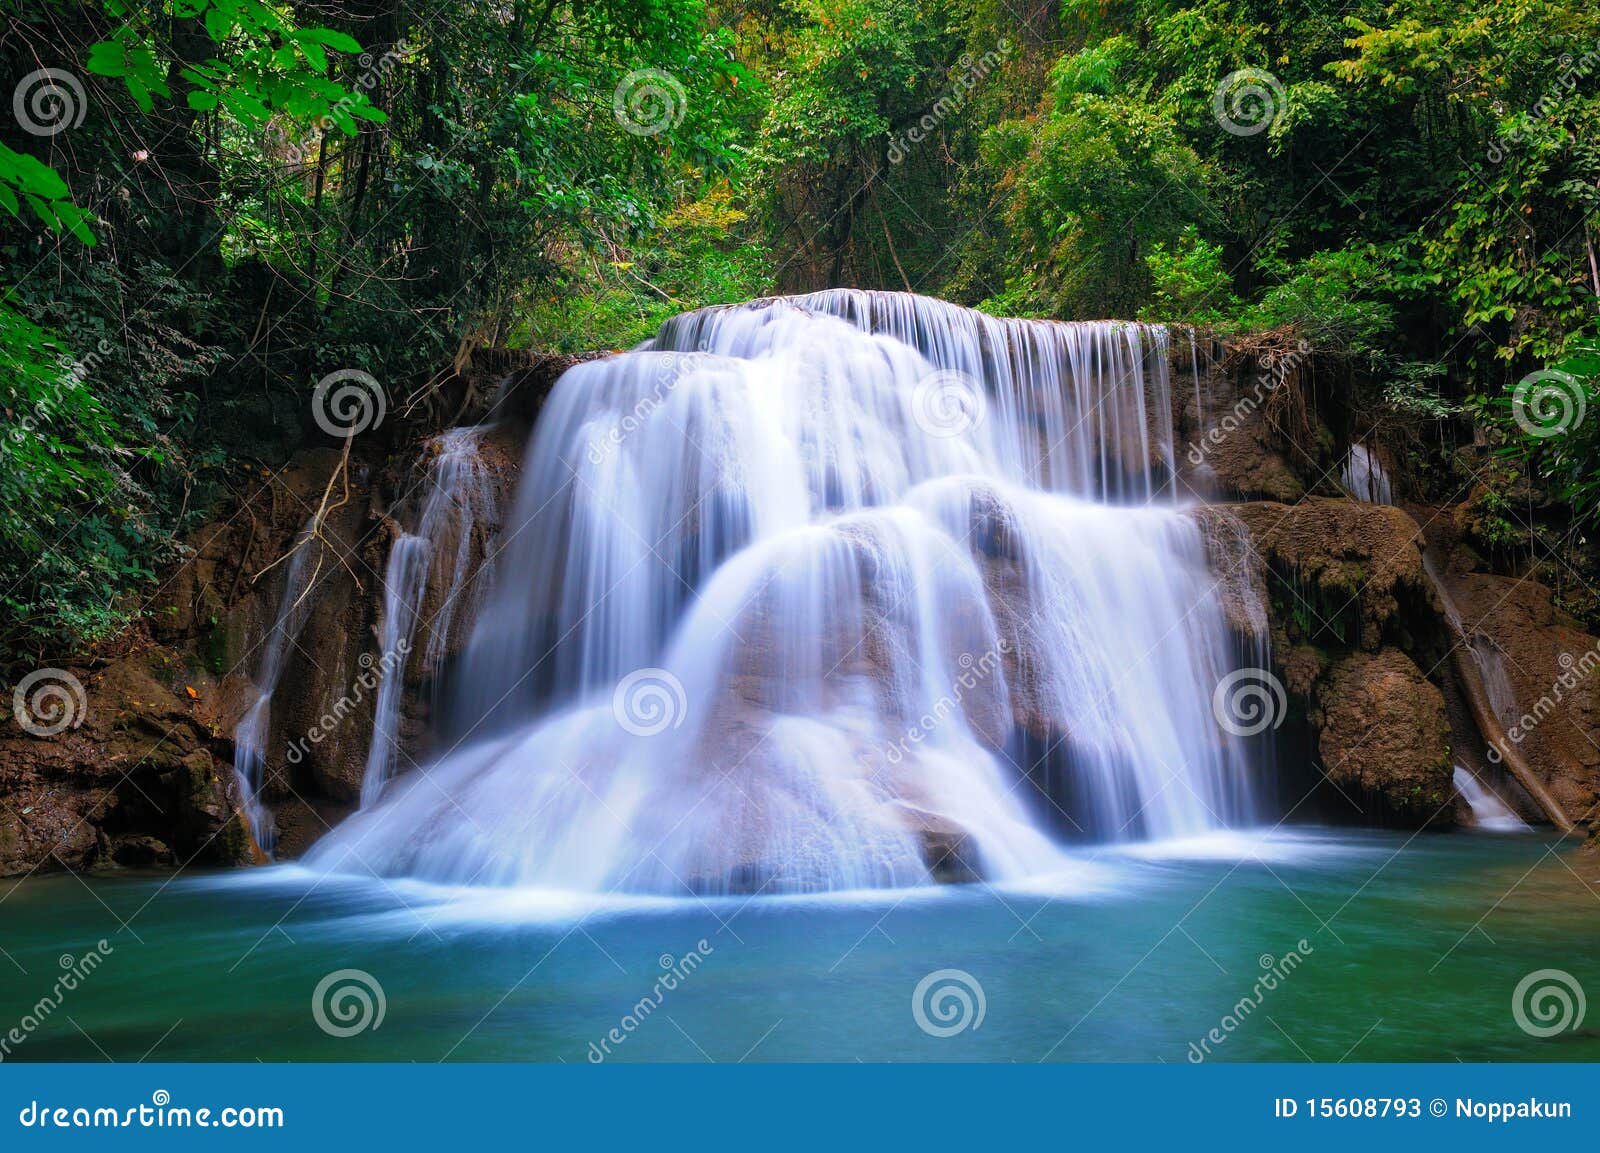 deep forest waterfall in kanchanaburi, thailand